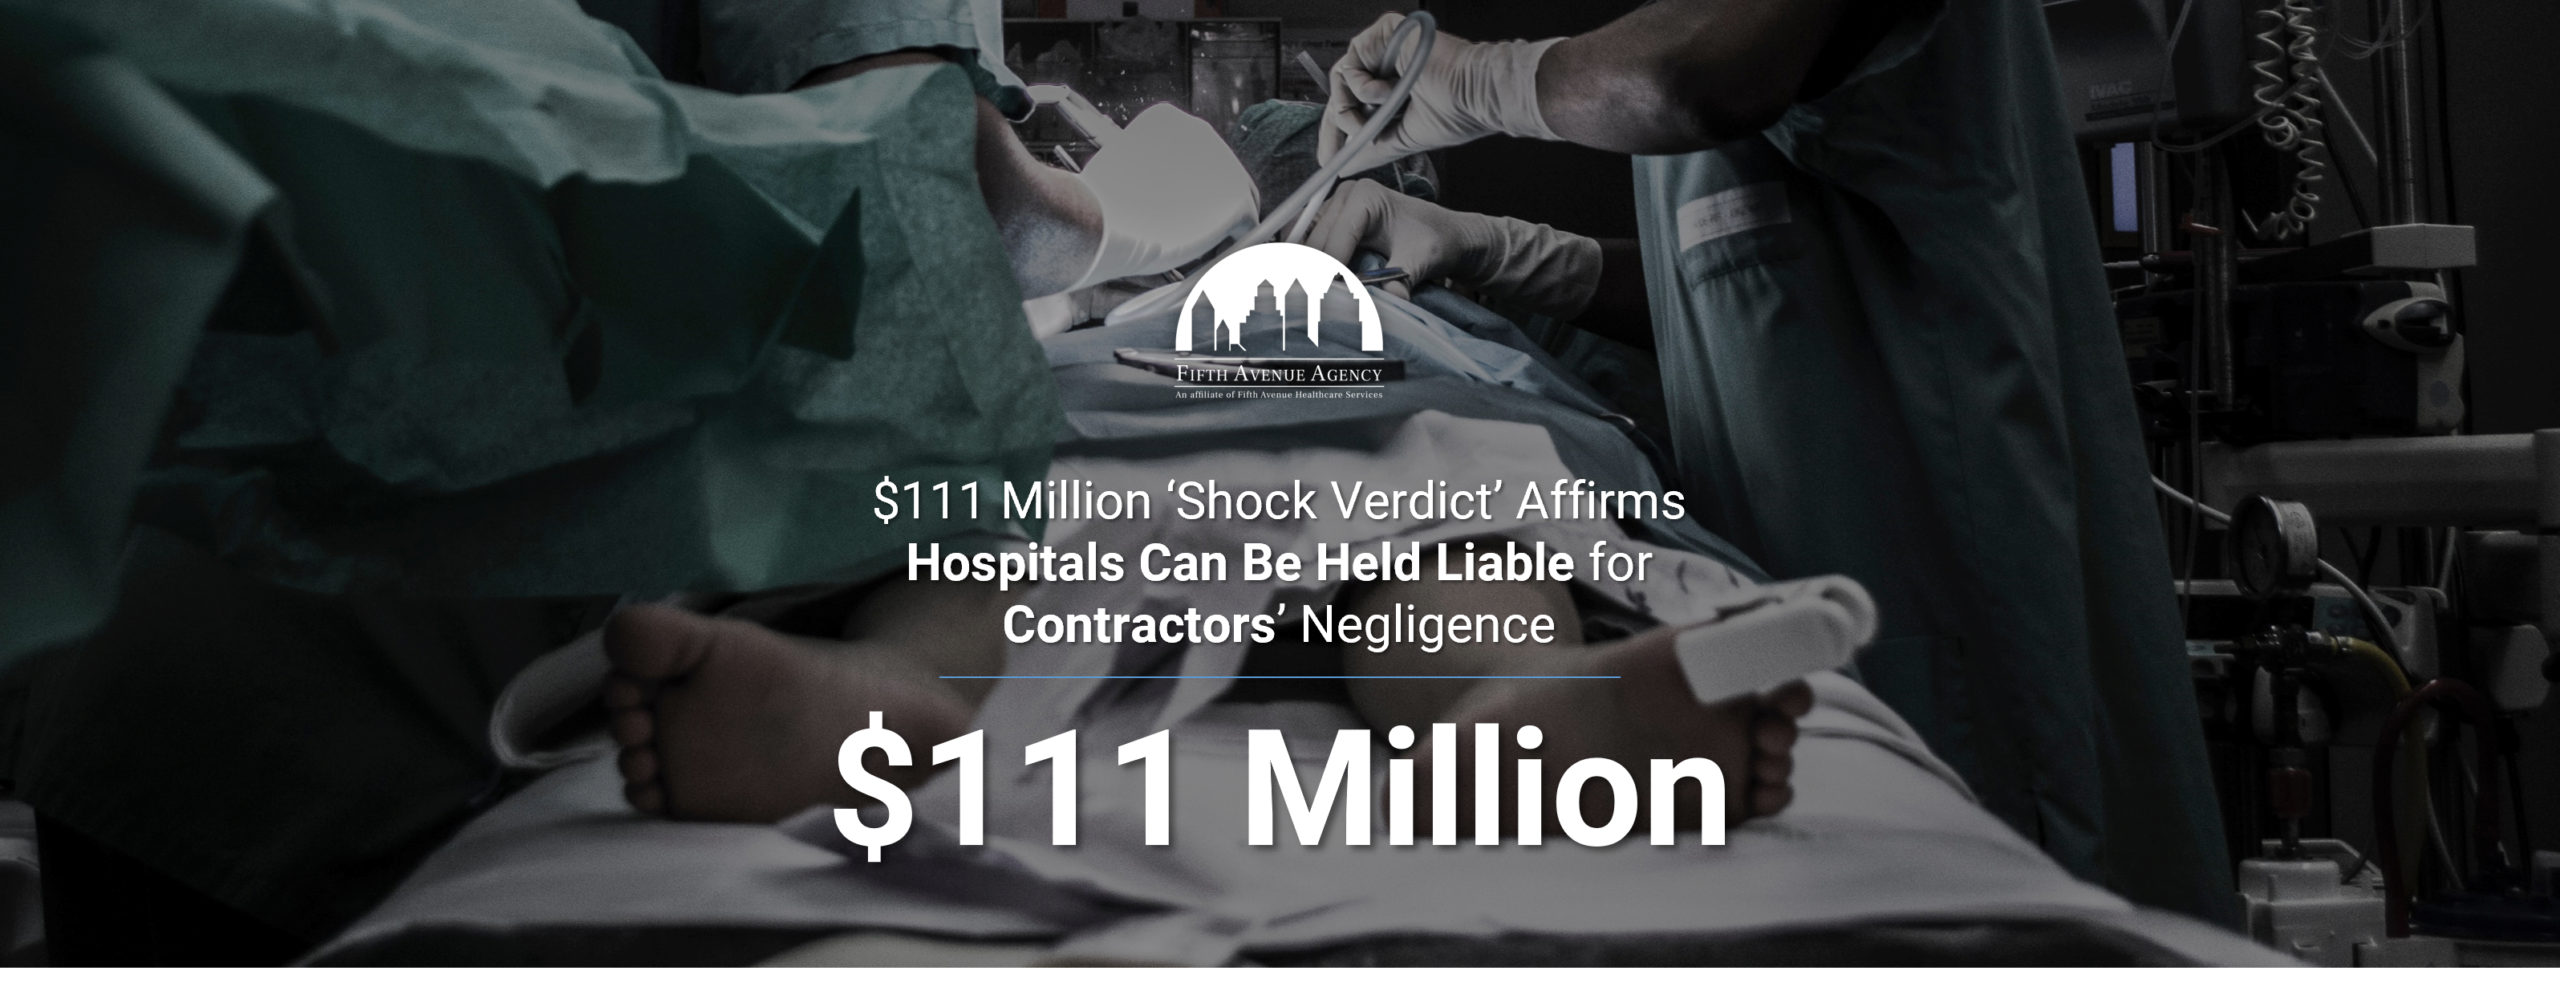 $111 Million Medical Malpractice Shock Verdict FifthAvenueAgency.com